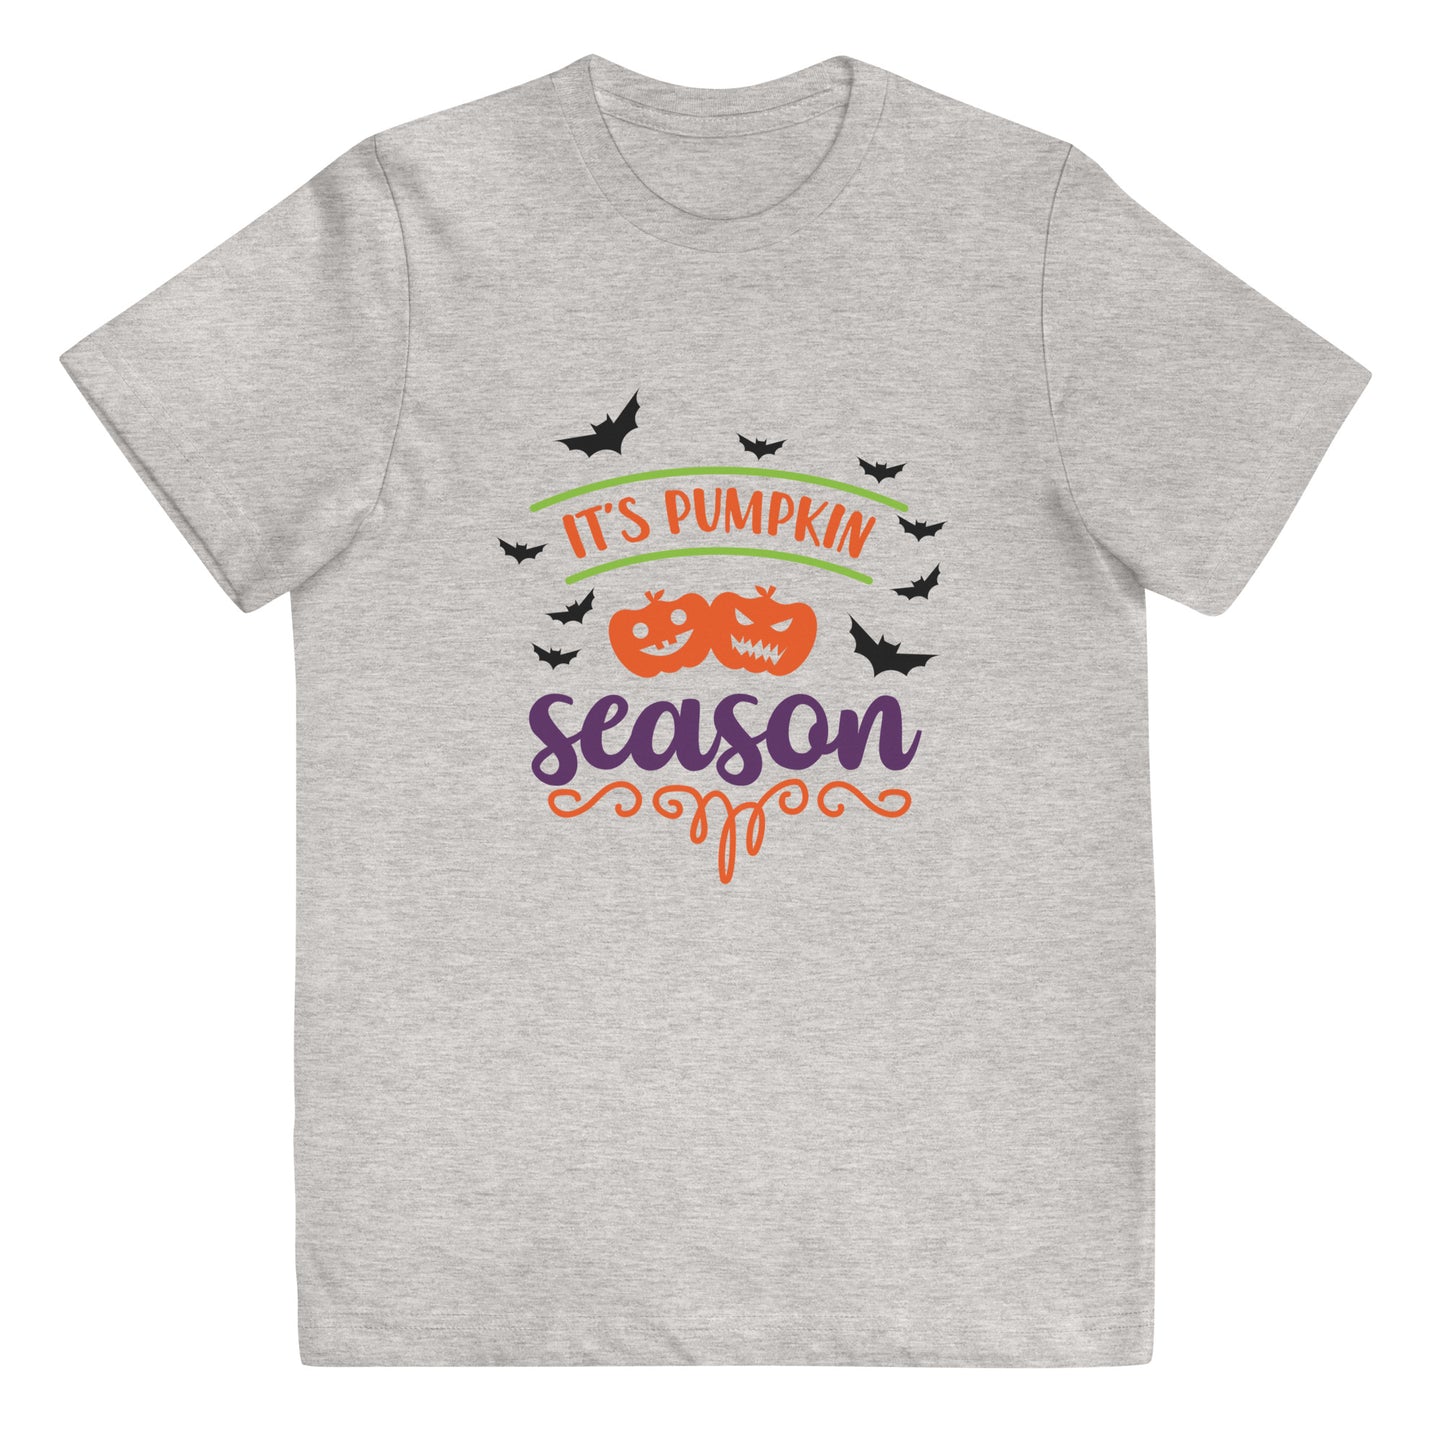 It's Pumpkin Season Youth jersey t-shirt